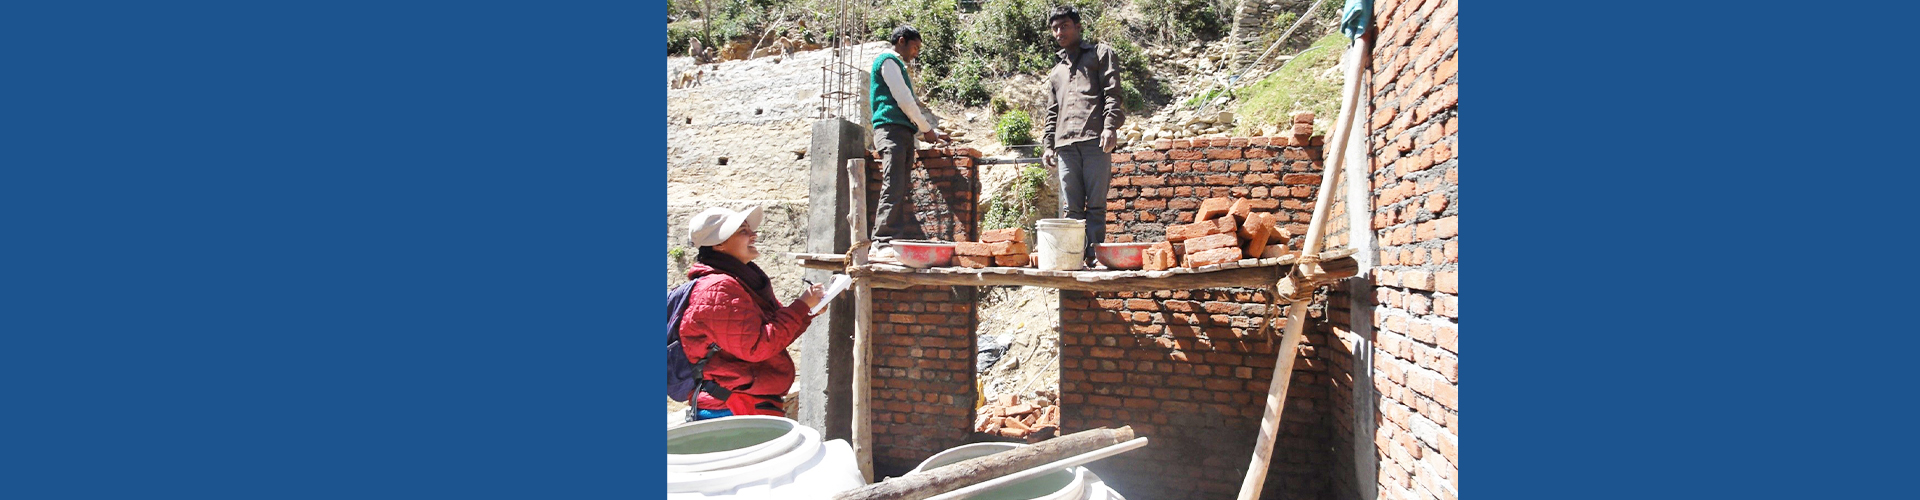 Neelakshi Joshi interviews masons as they construct a house in Almora, India. Photo by Neelakshi Joshi